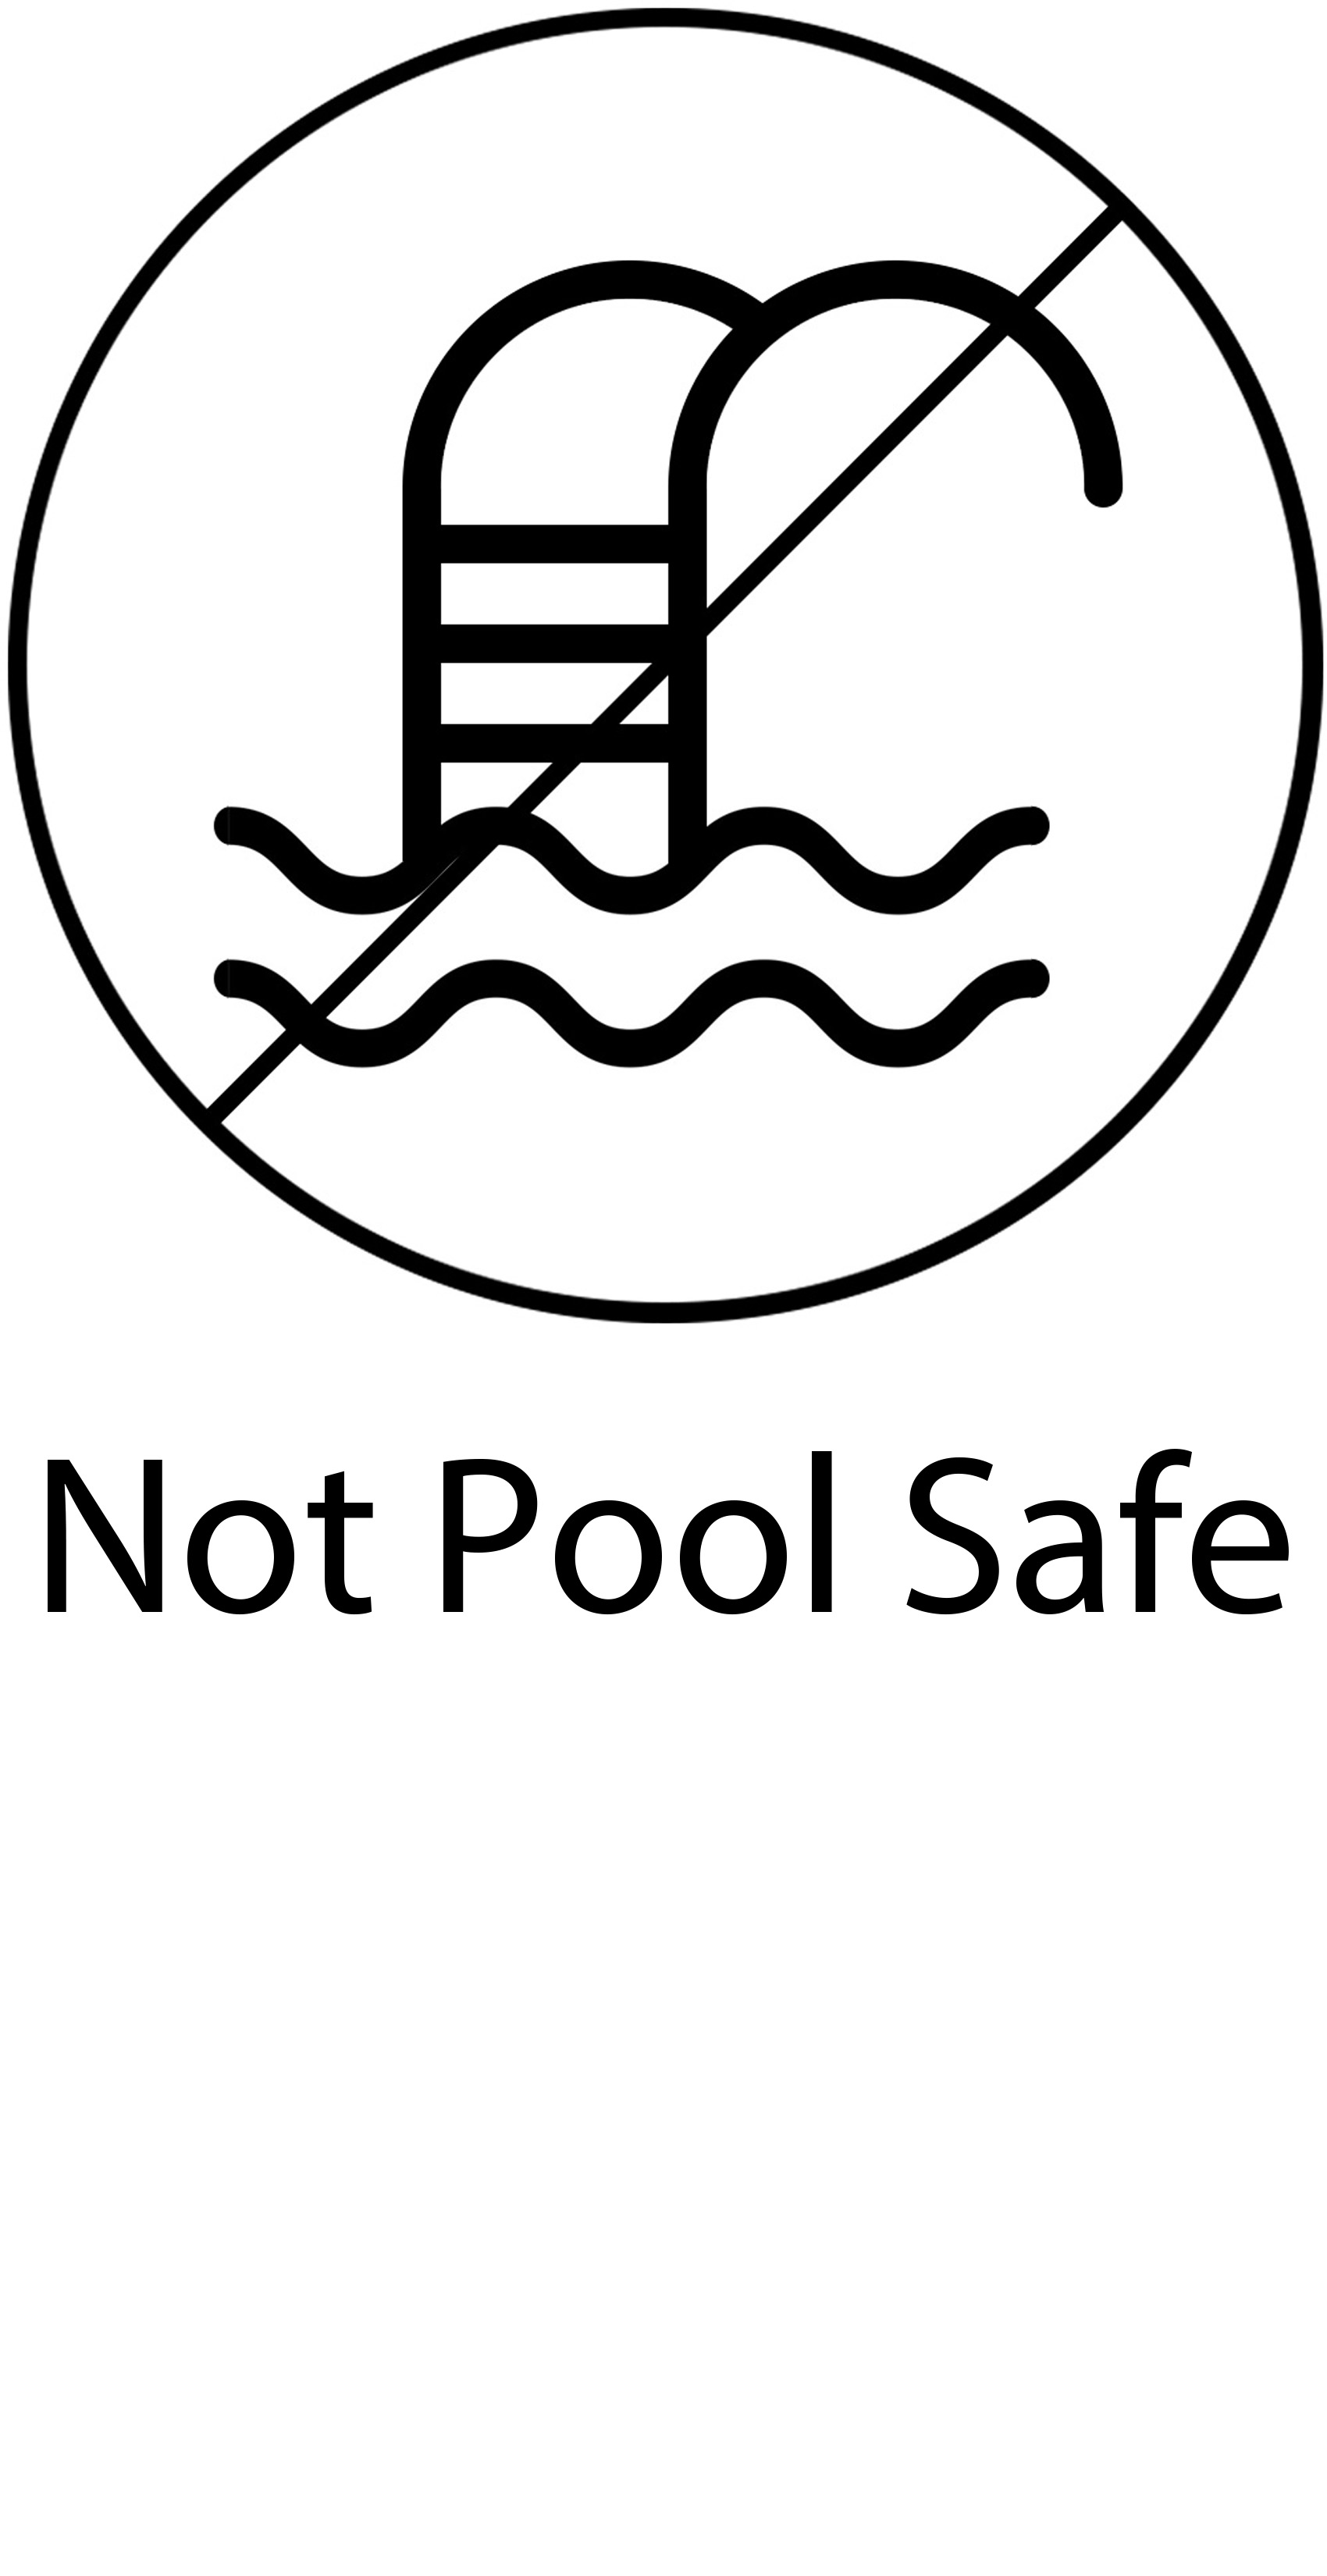 A_not pool safe.jpg